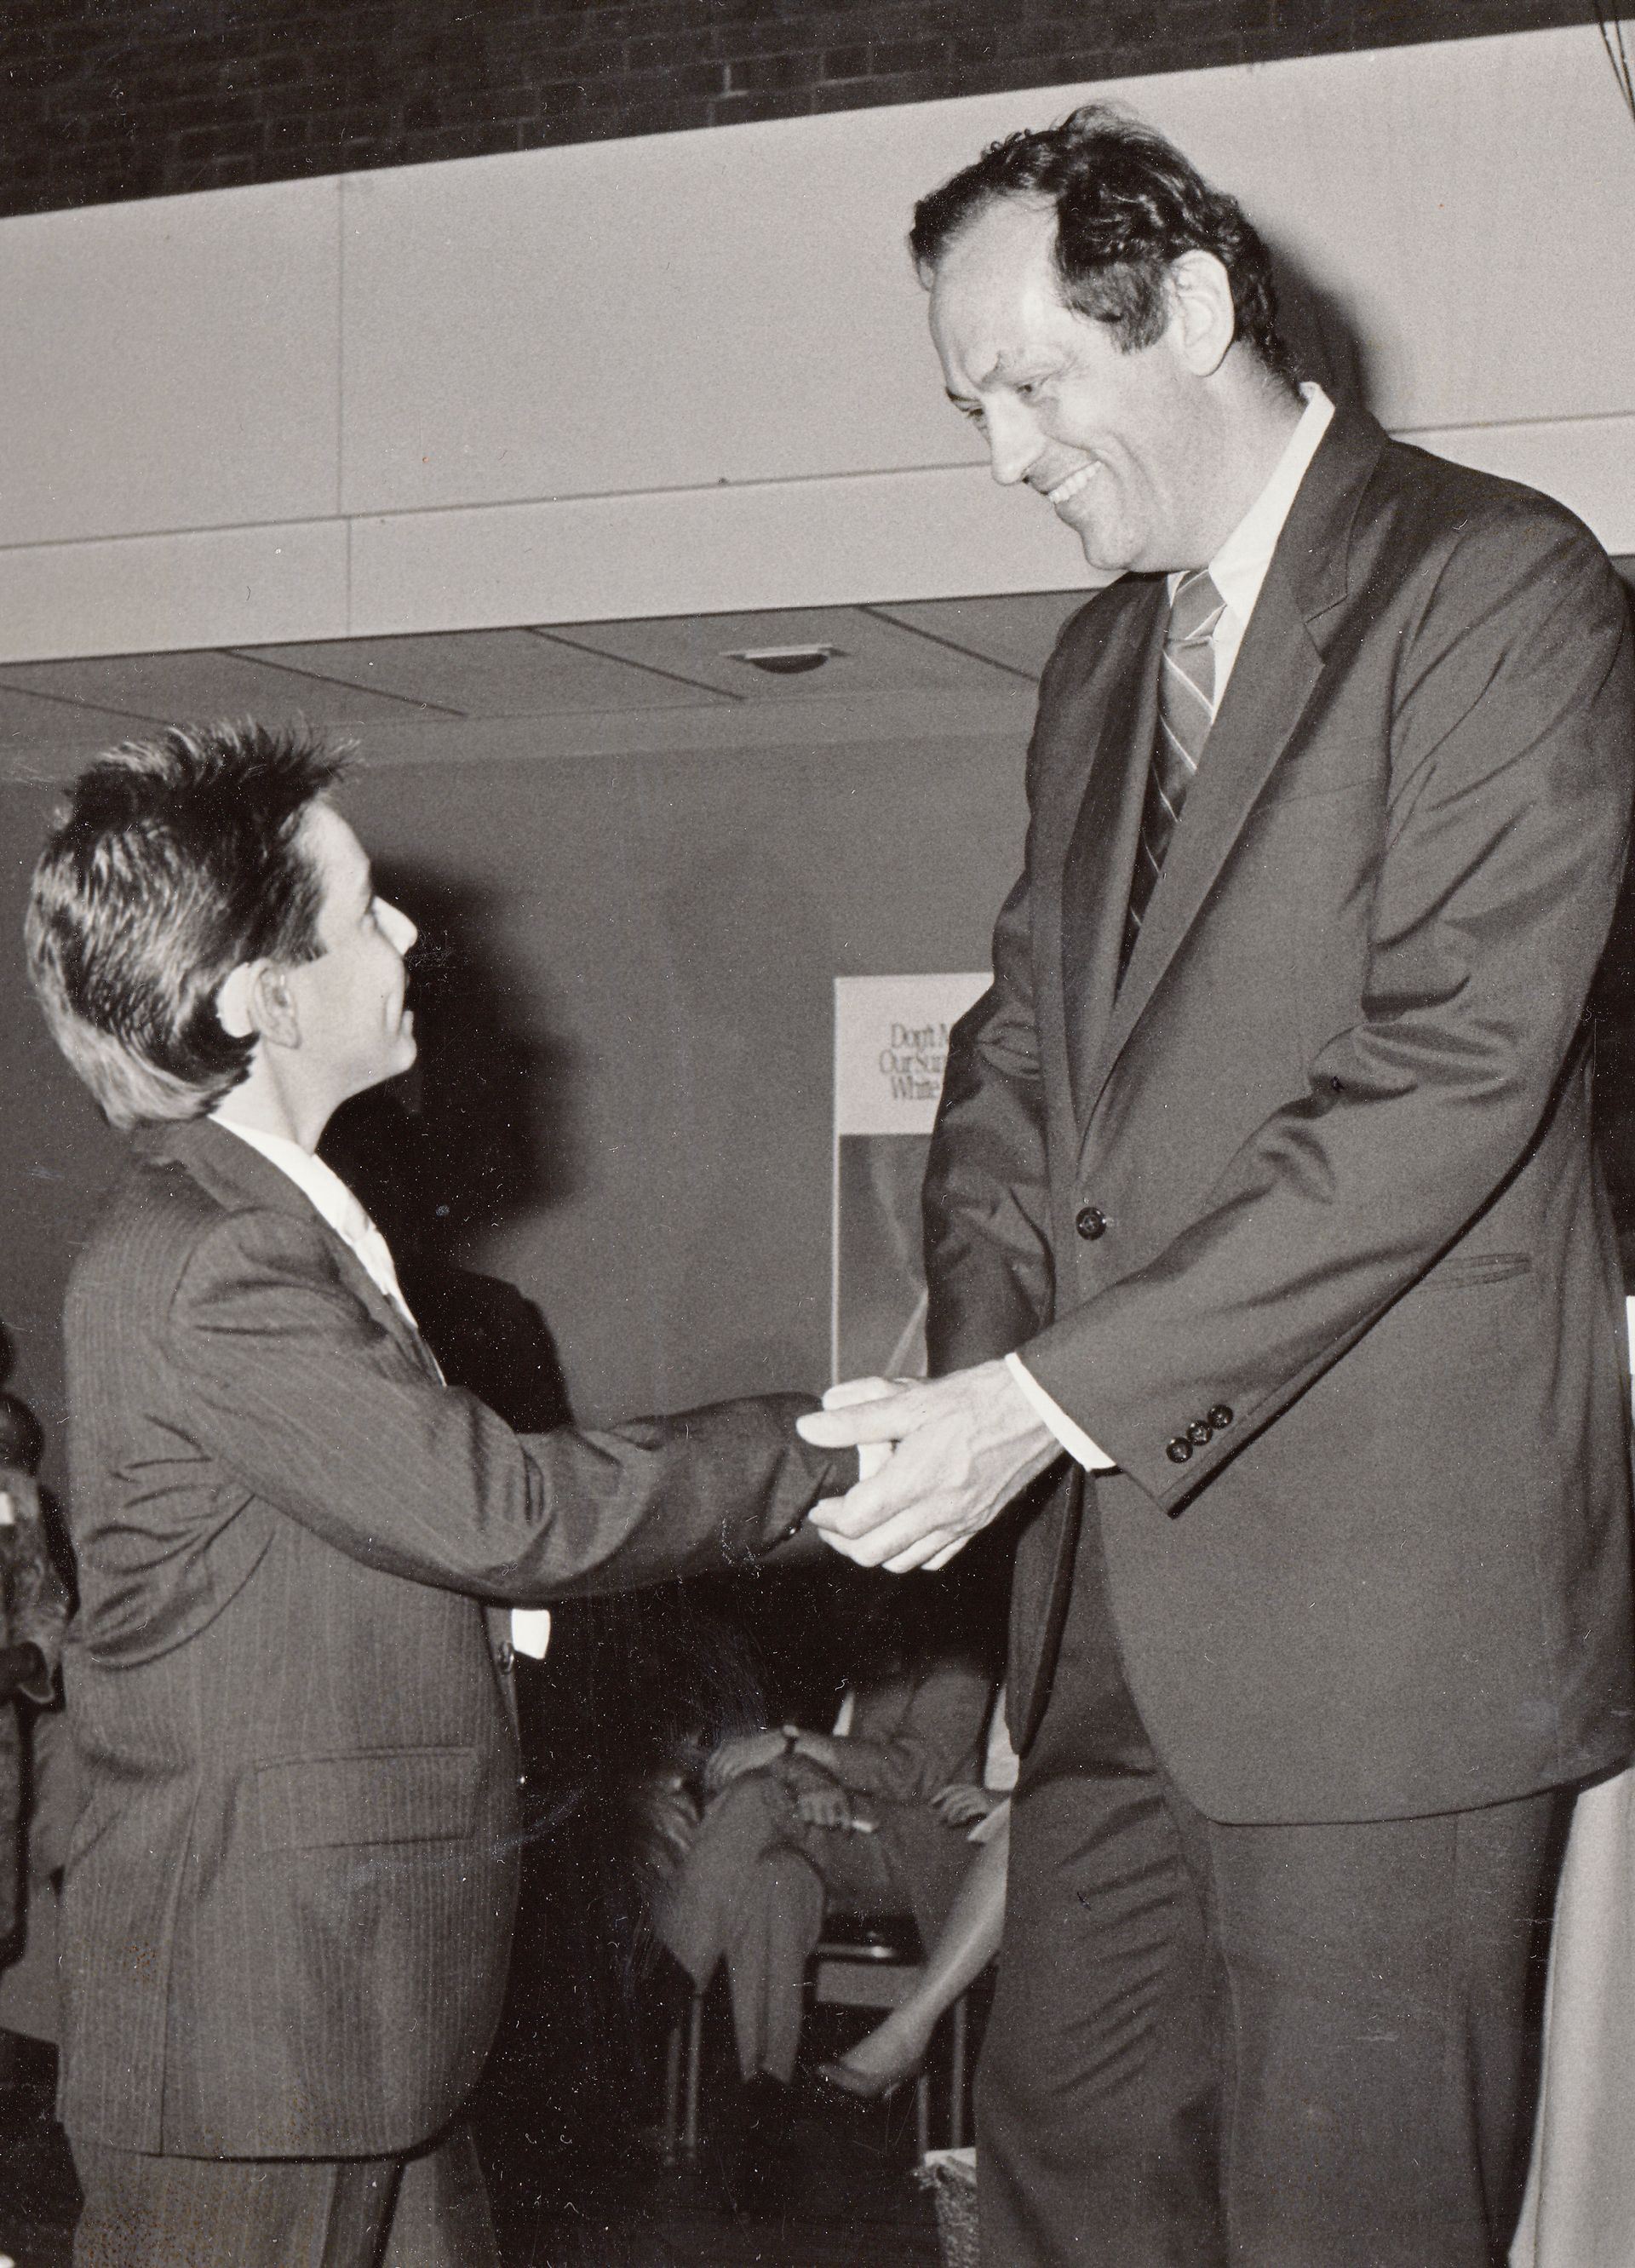 Paul Wichansky with Senator Bill Bradley